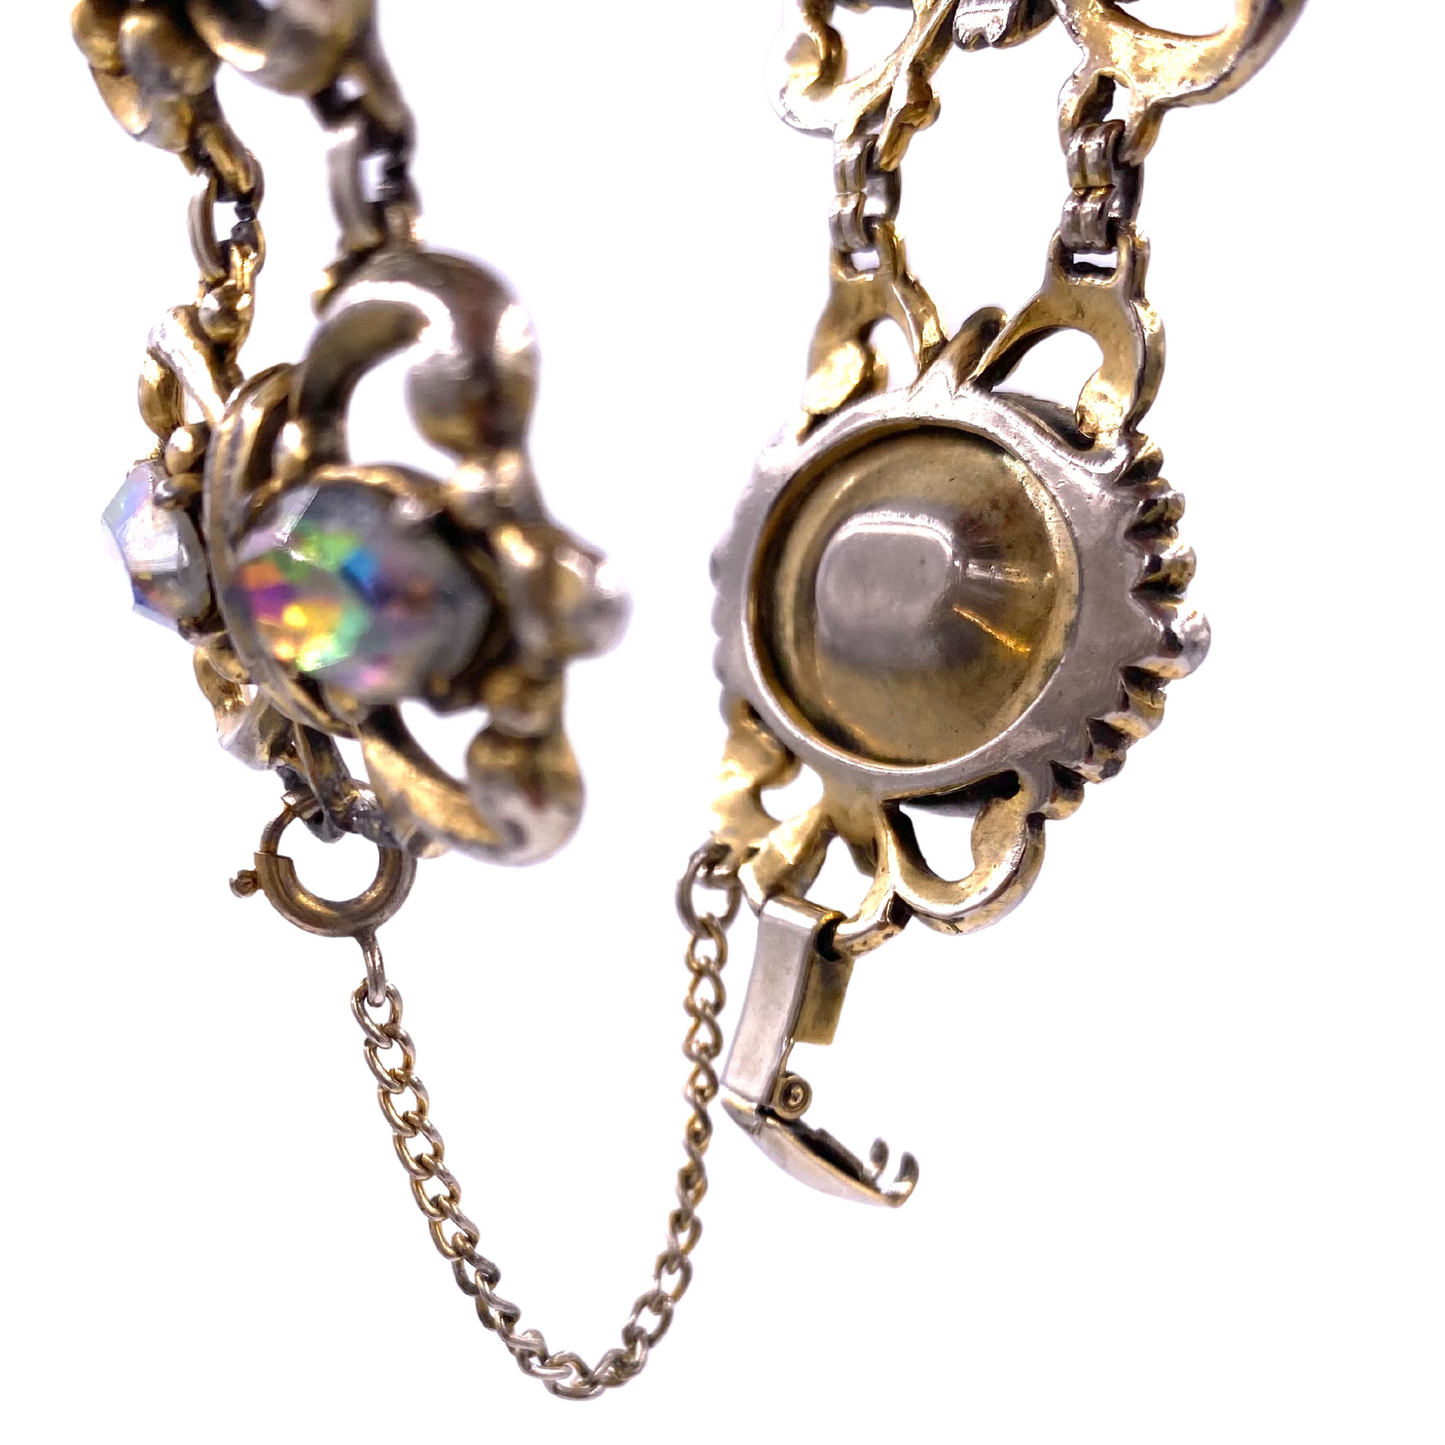 Schiaparelli Silver Bracelet with Gripoix Pastel Cabachon Stones